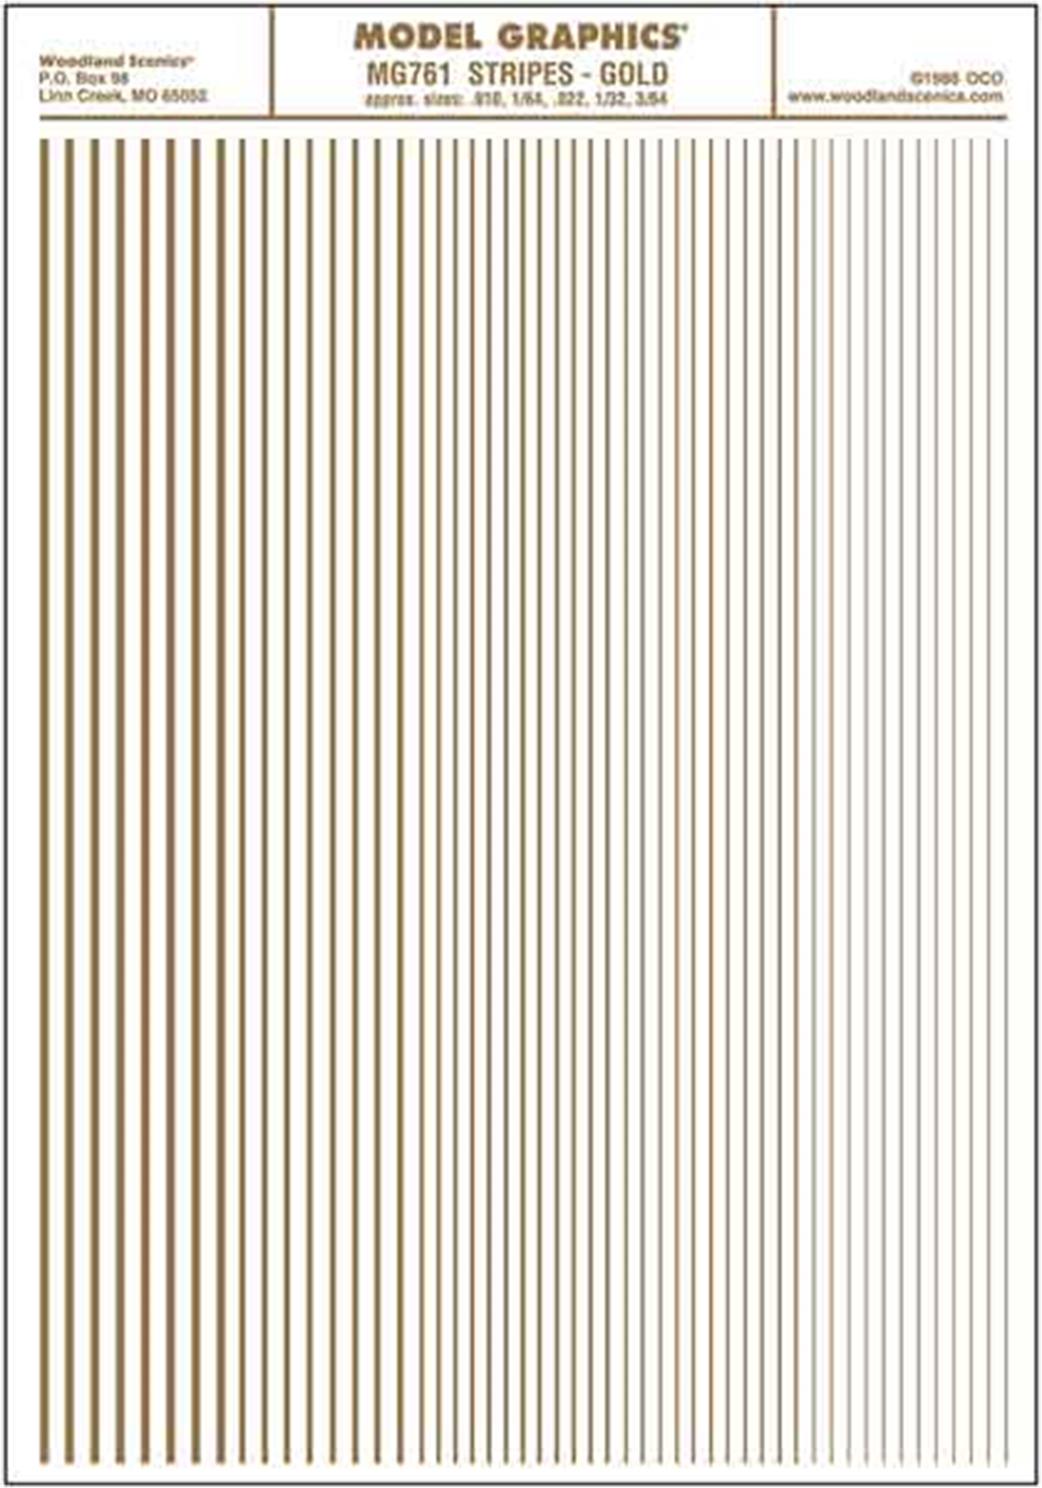 Woodland Scenics  MG761 Dry Transfer Gold Stripes 0.01 1/64 0.022 1/32 5/64